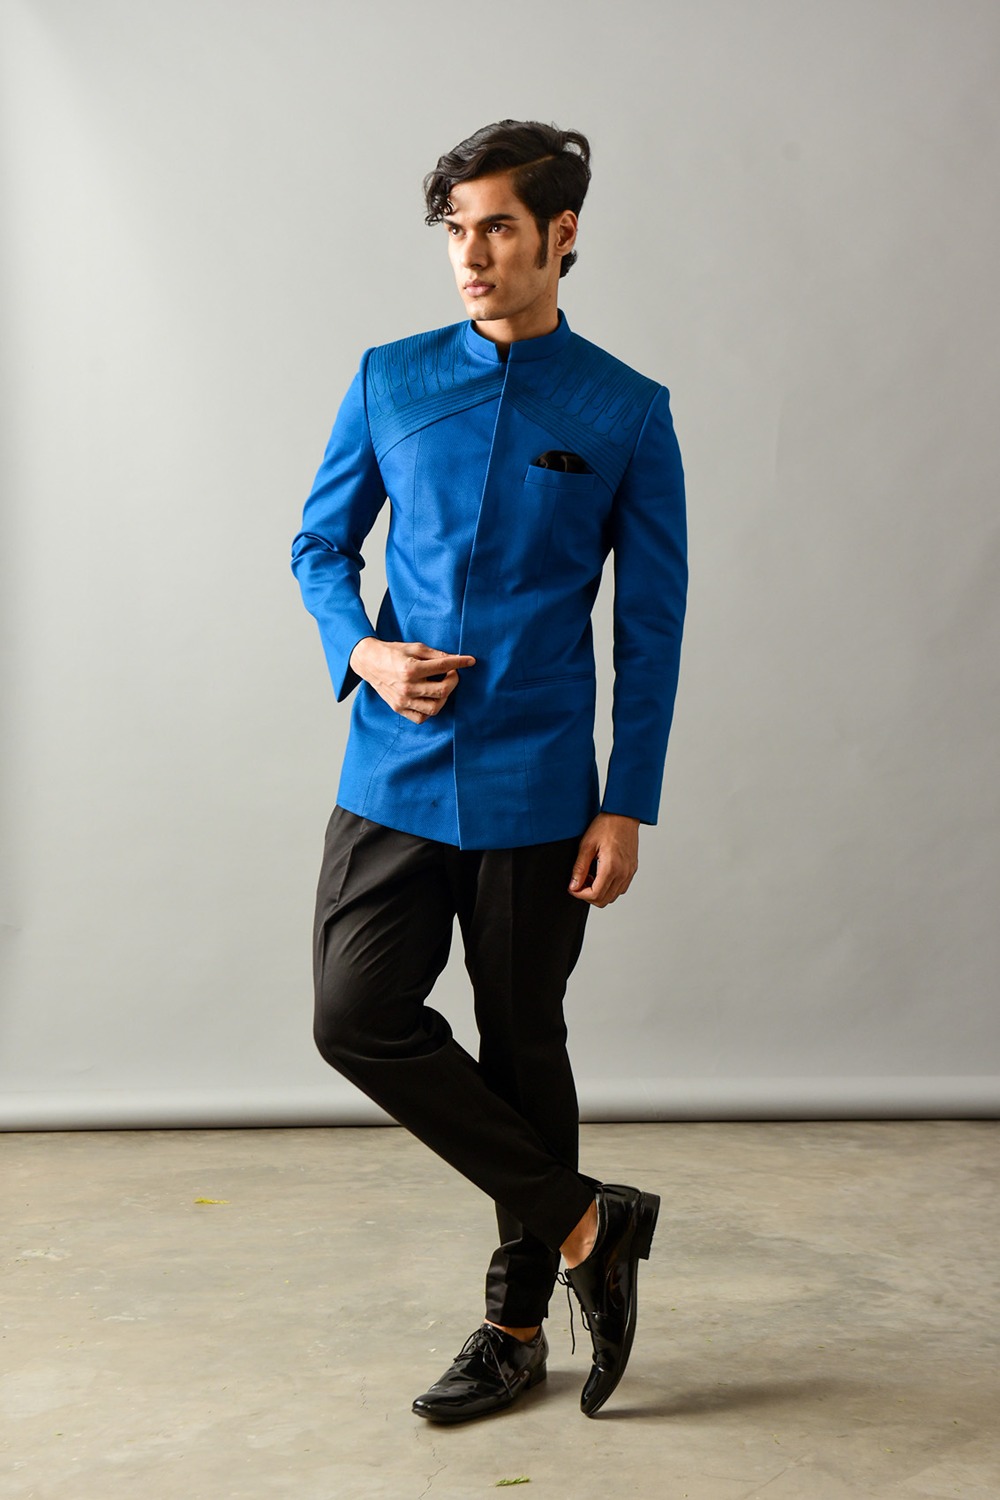 Agape Bright Blue Suit